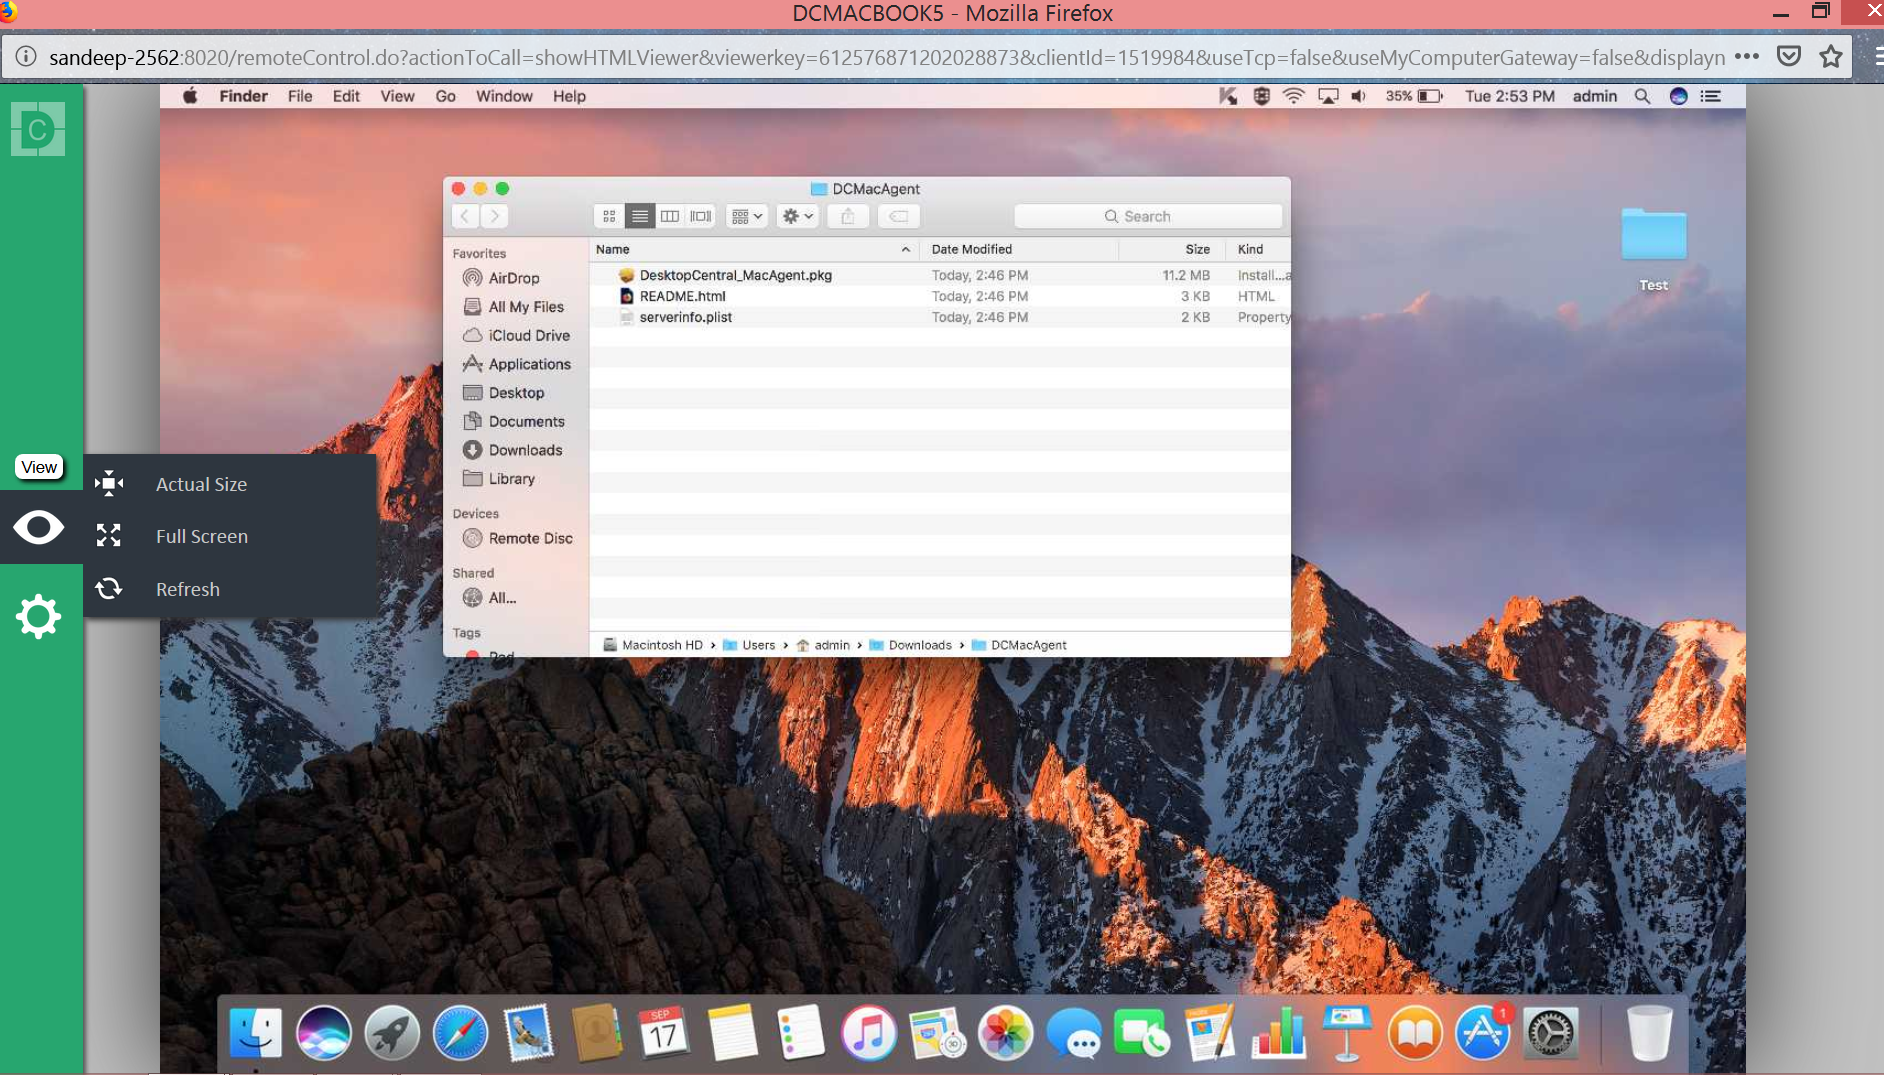 Avvia sessioni da remoto sui desktop Mac in pochi click